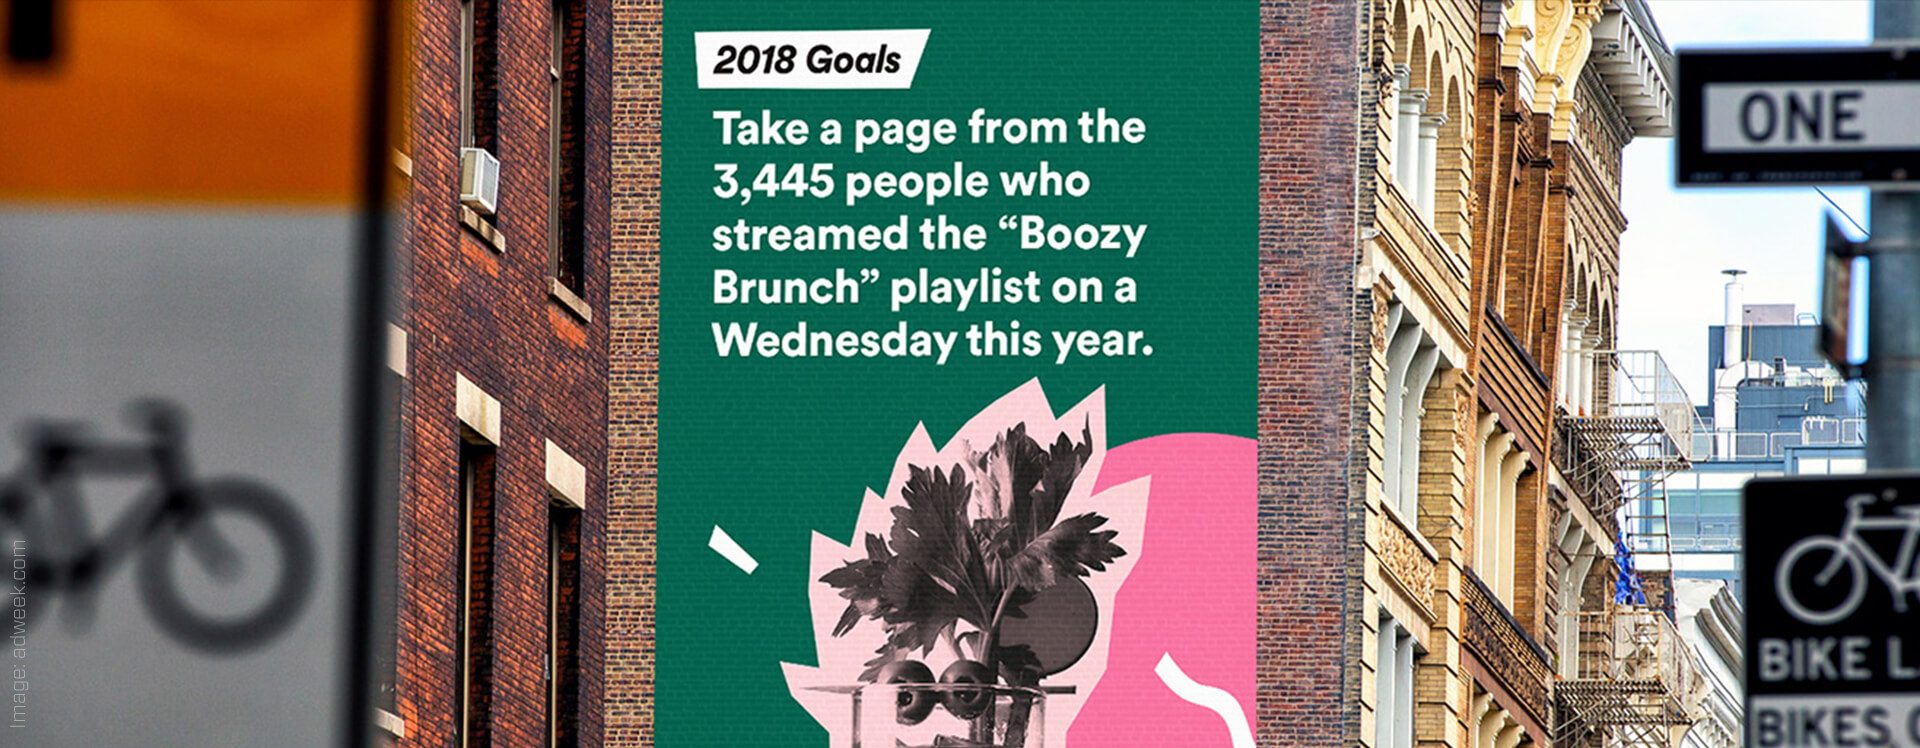 Spotify Ad - 2018 Goals 